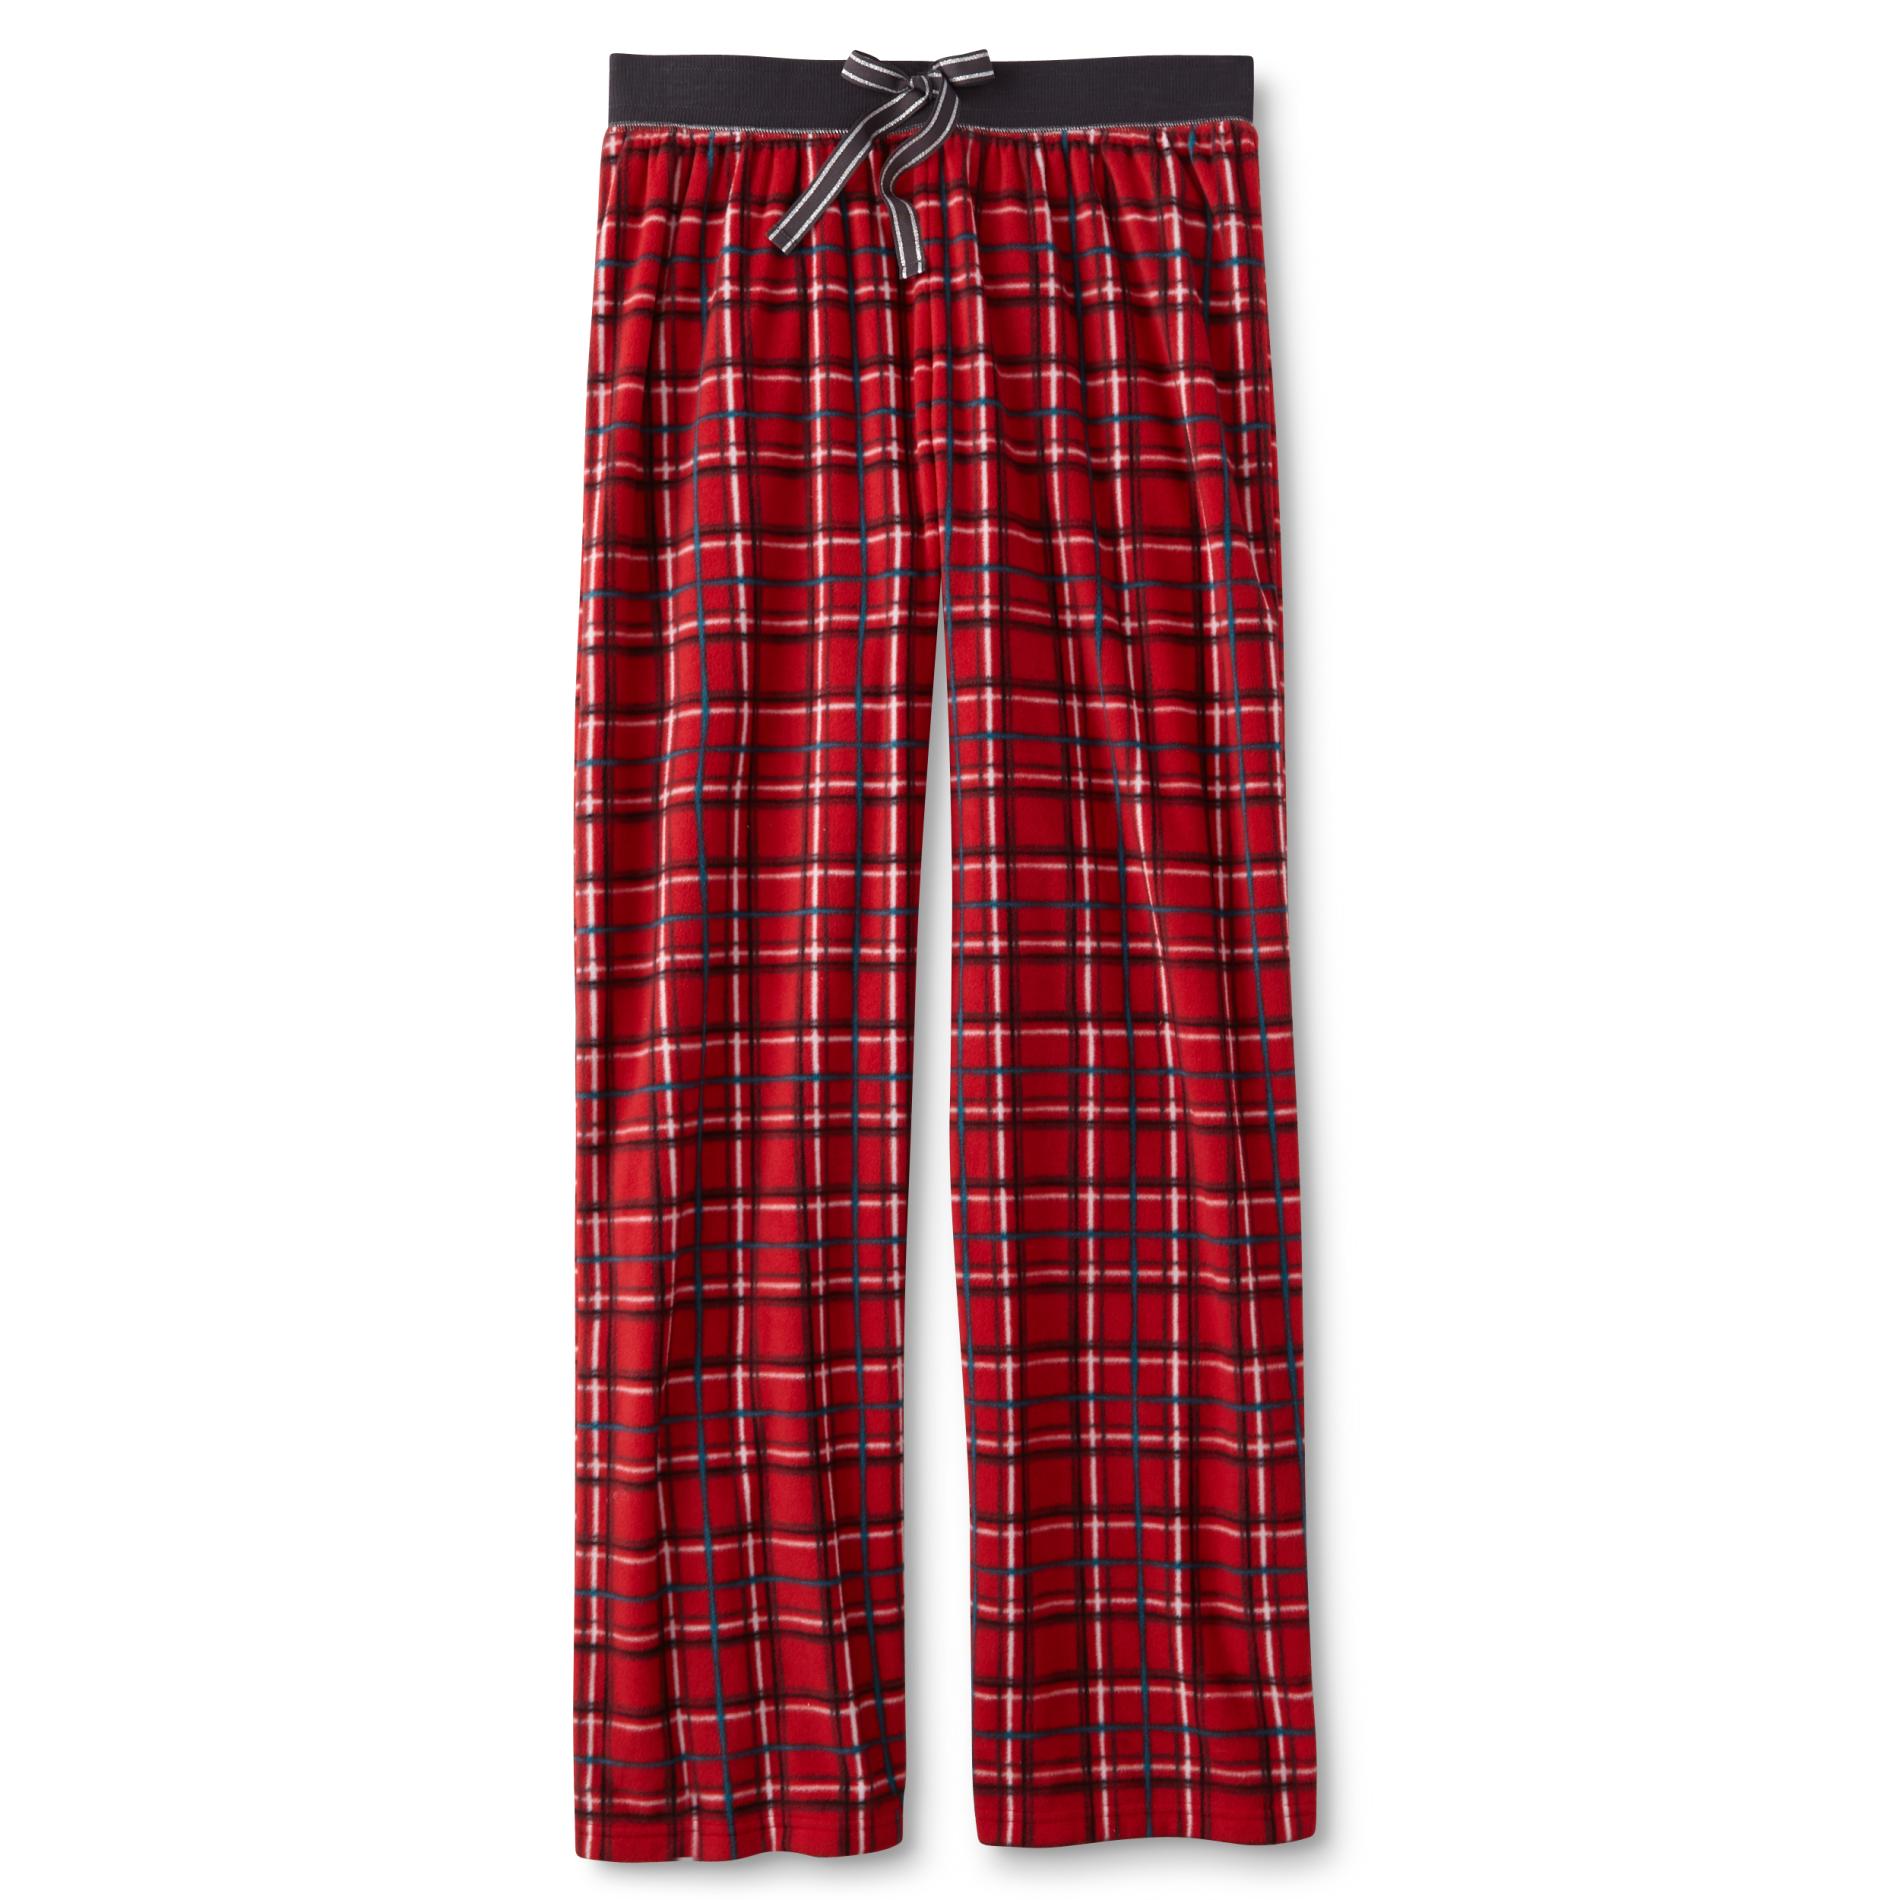 Covington Women's Fleece Pajama Pants - Plaid